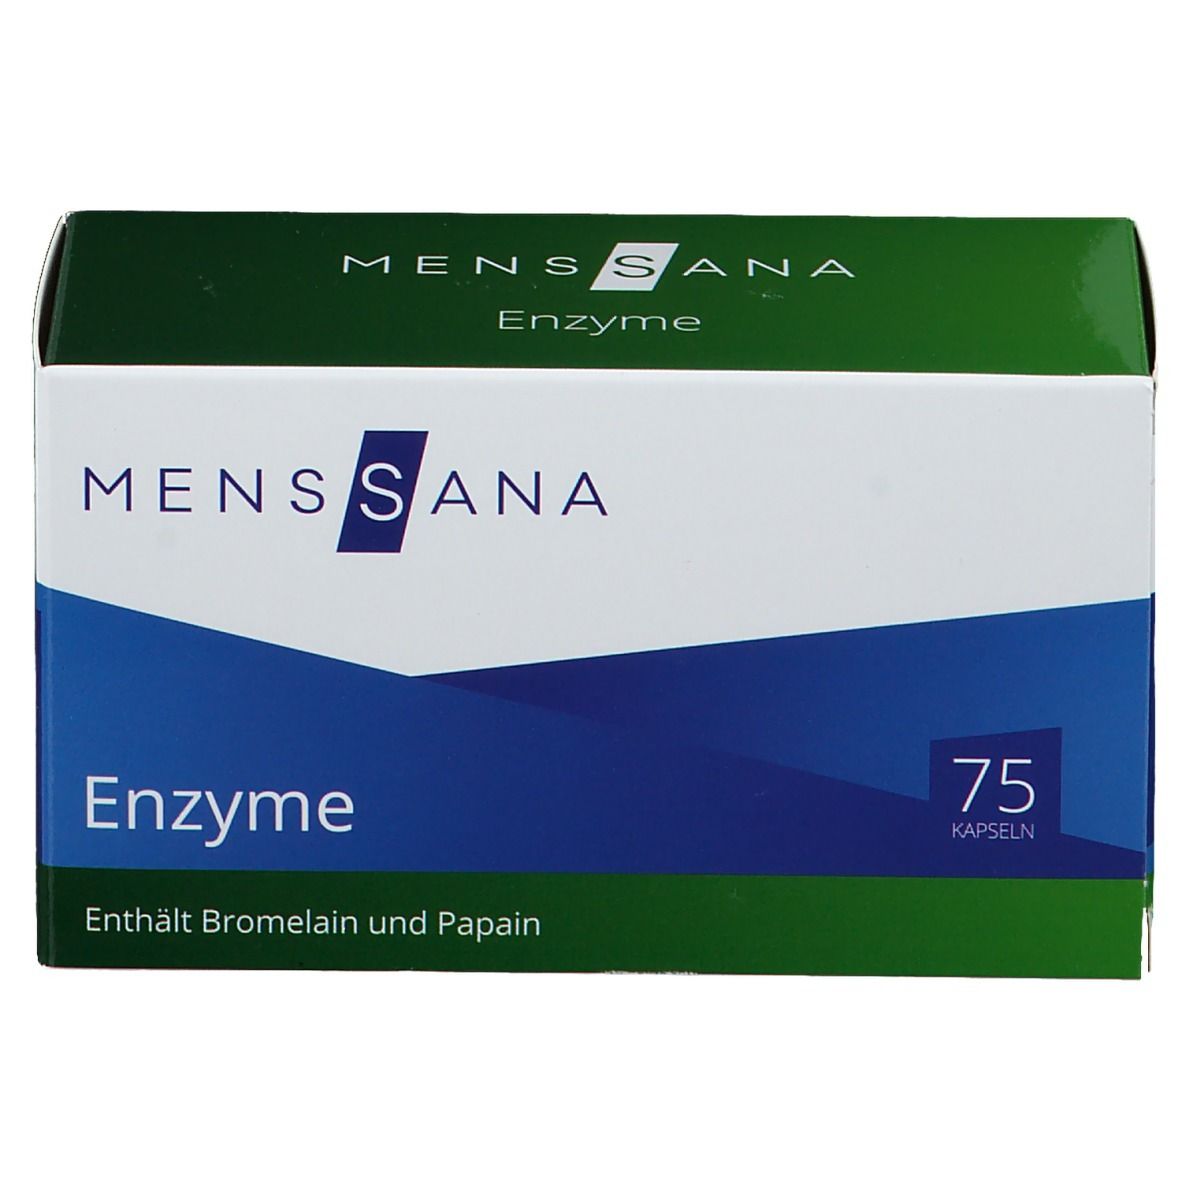 MENSSANA Enzyme